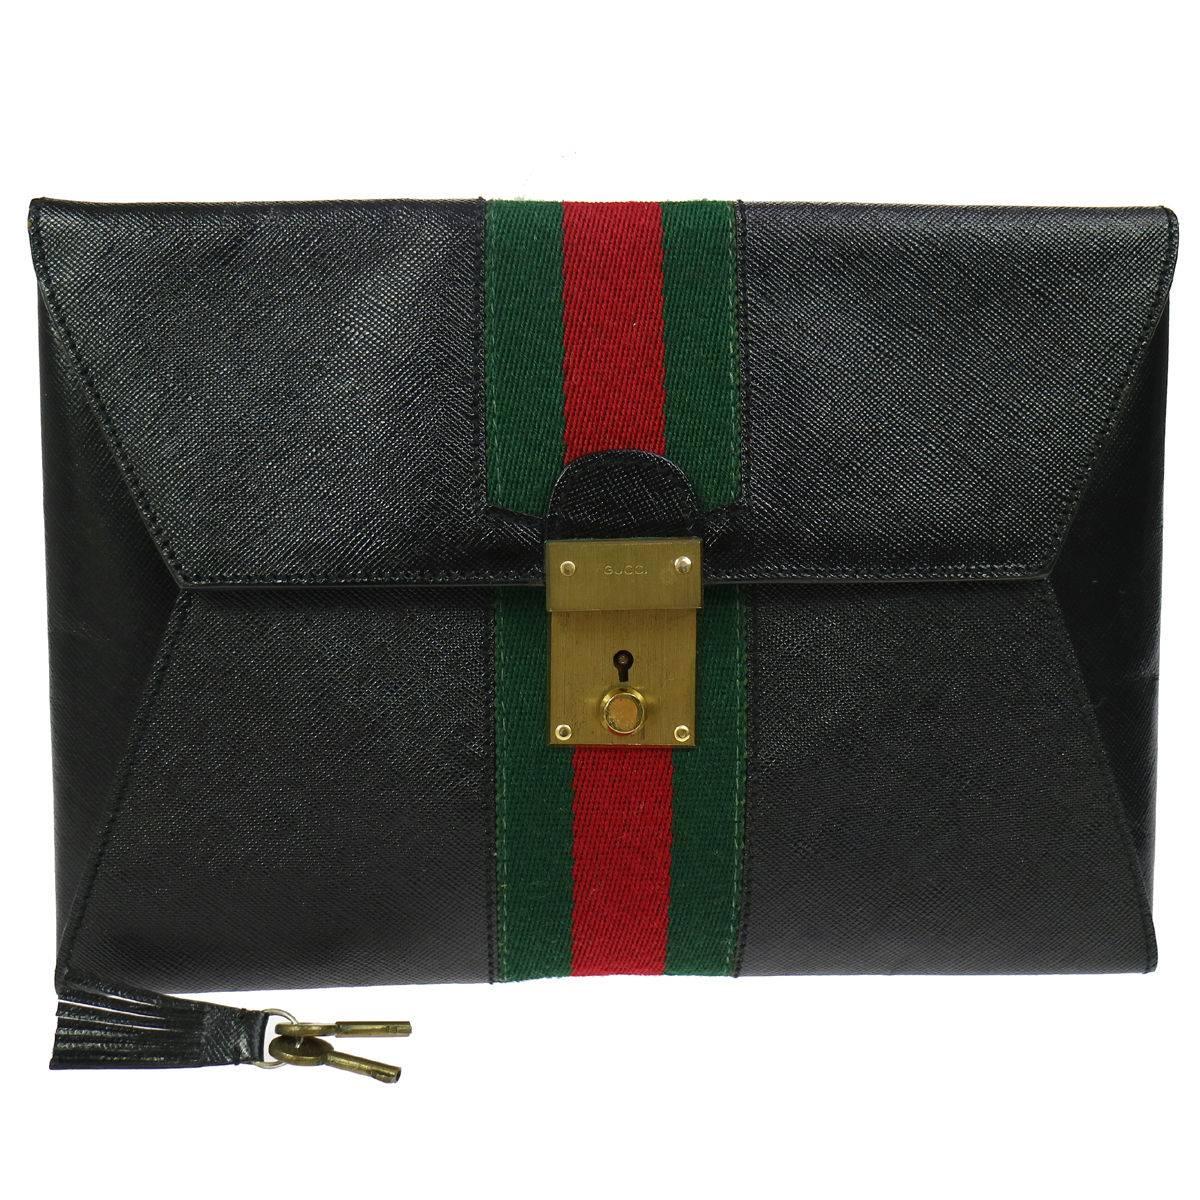 Gucci Black Leather Web Men's Women's Tech Envelope Evening Clutch Bag With Keys